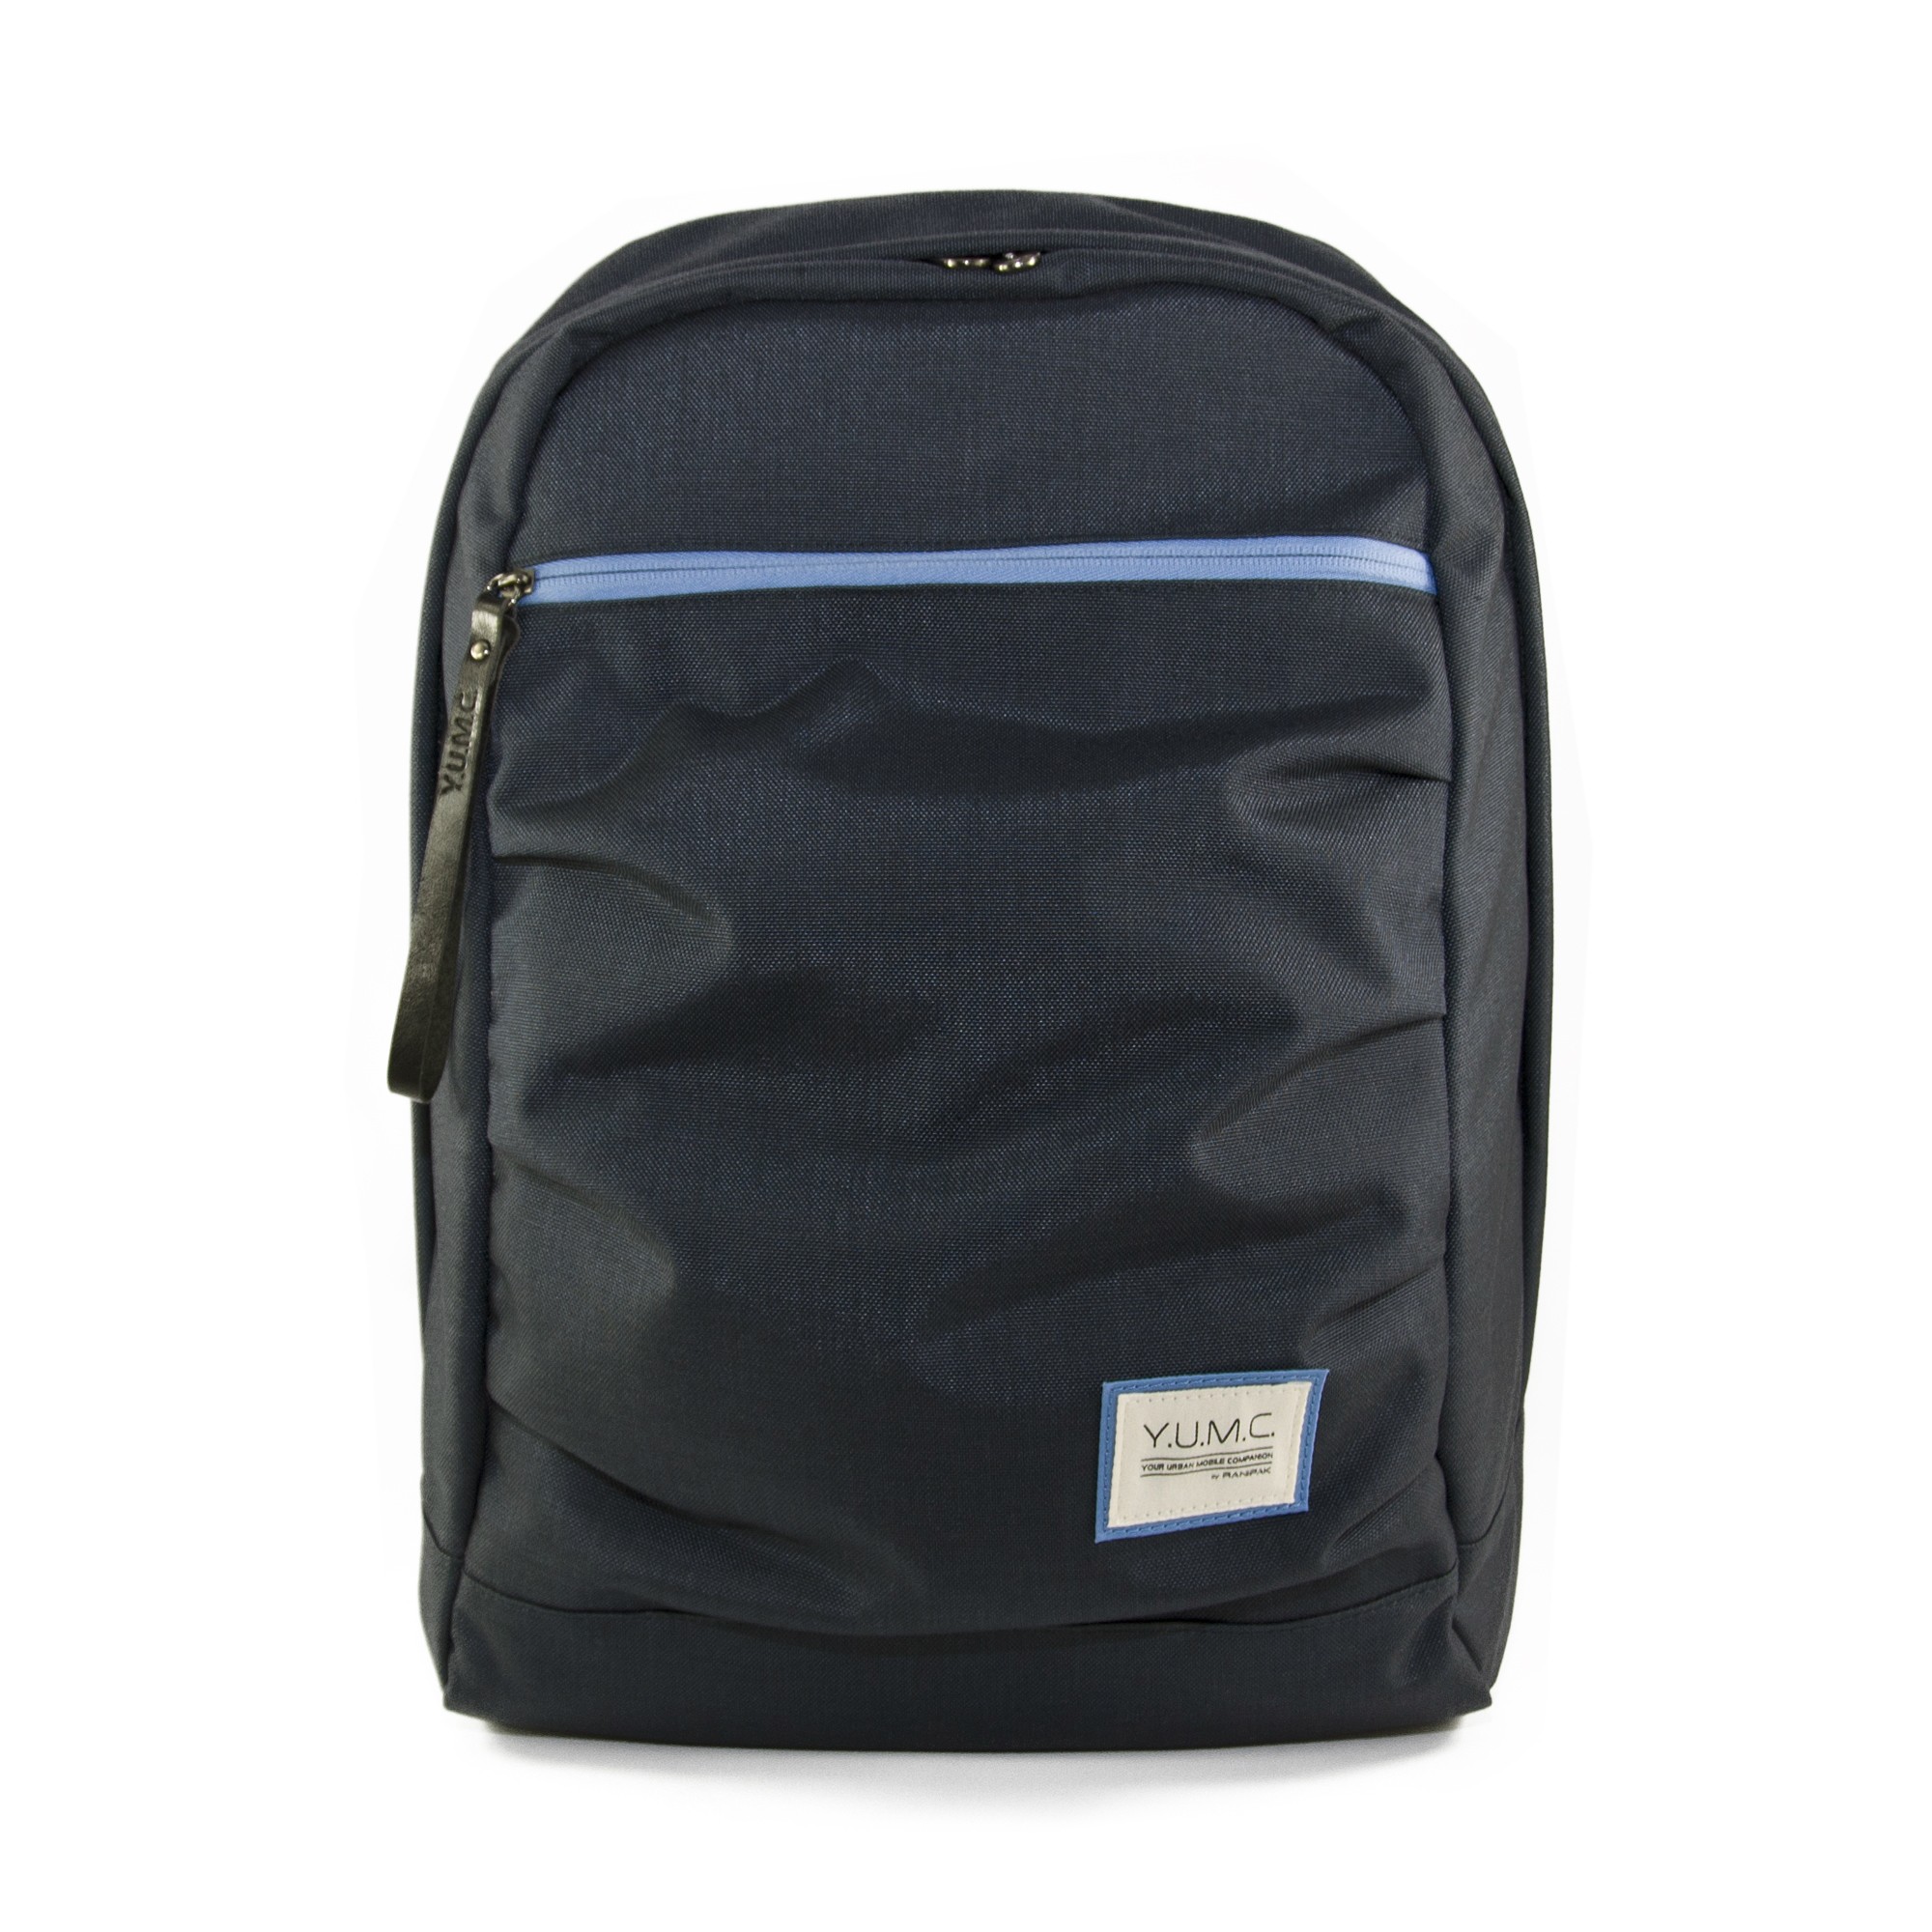 YUMC Laptop Notebook Ipad Fashion Mini Messenger 13 Inch Ranipak Bag Dawn/Black One Size 